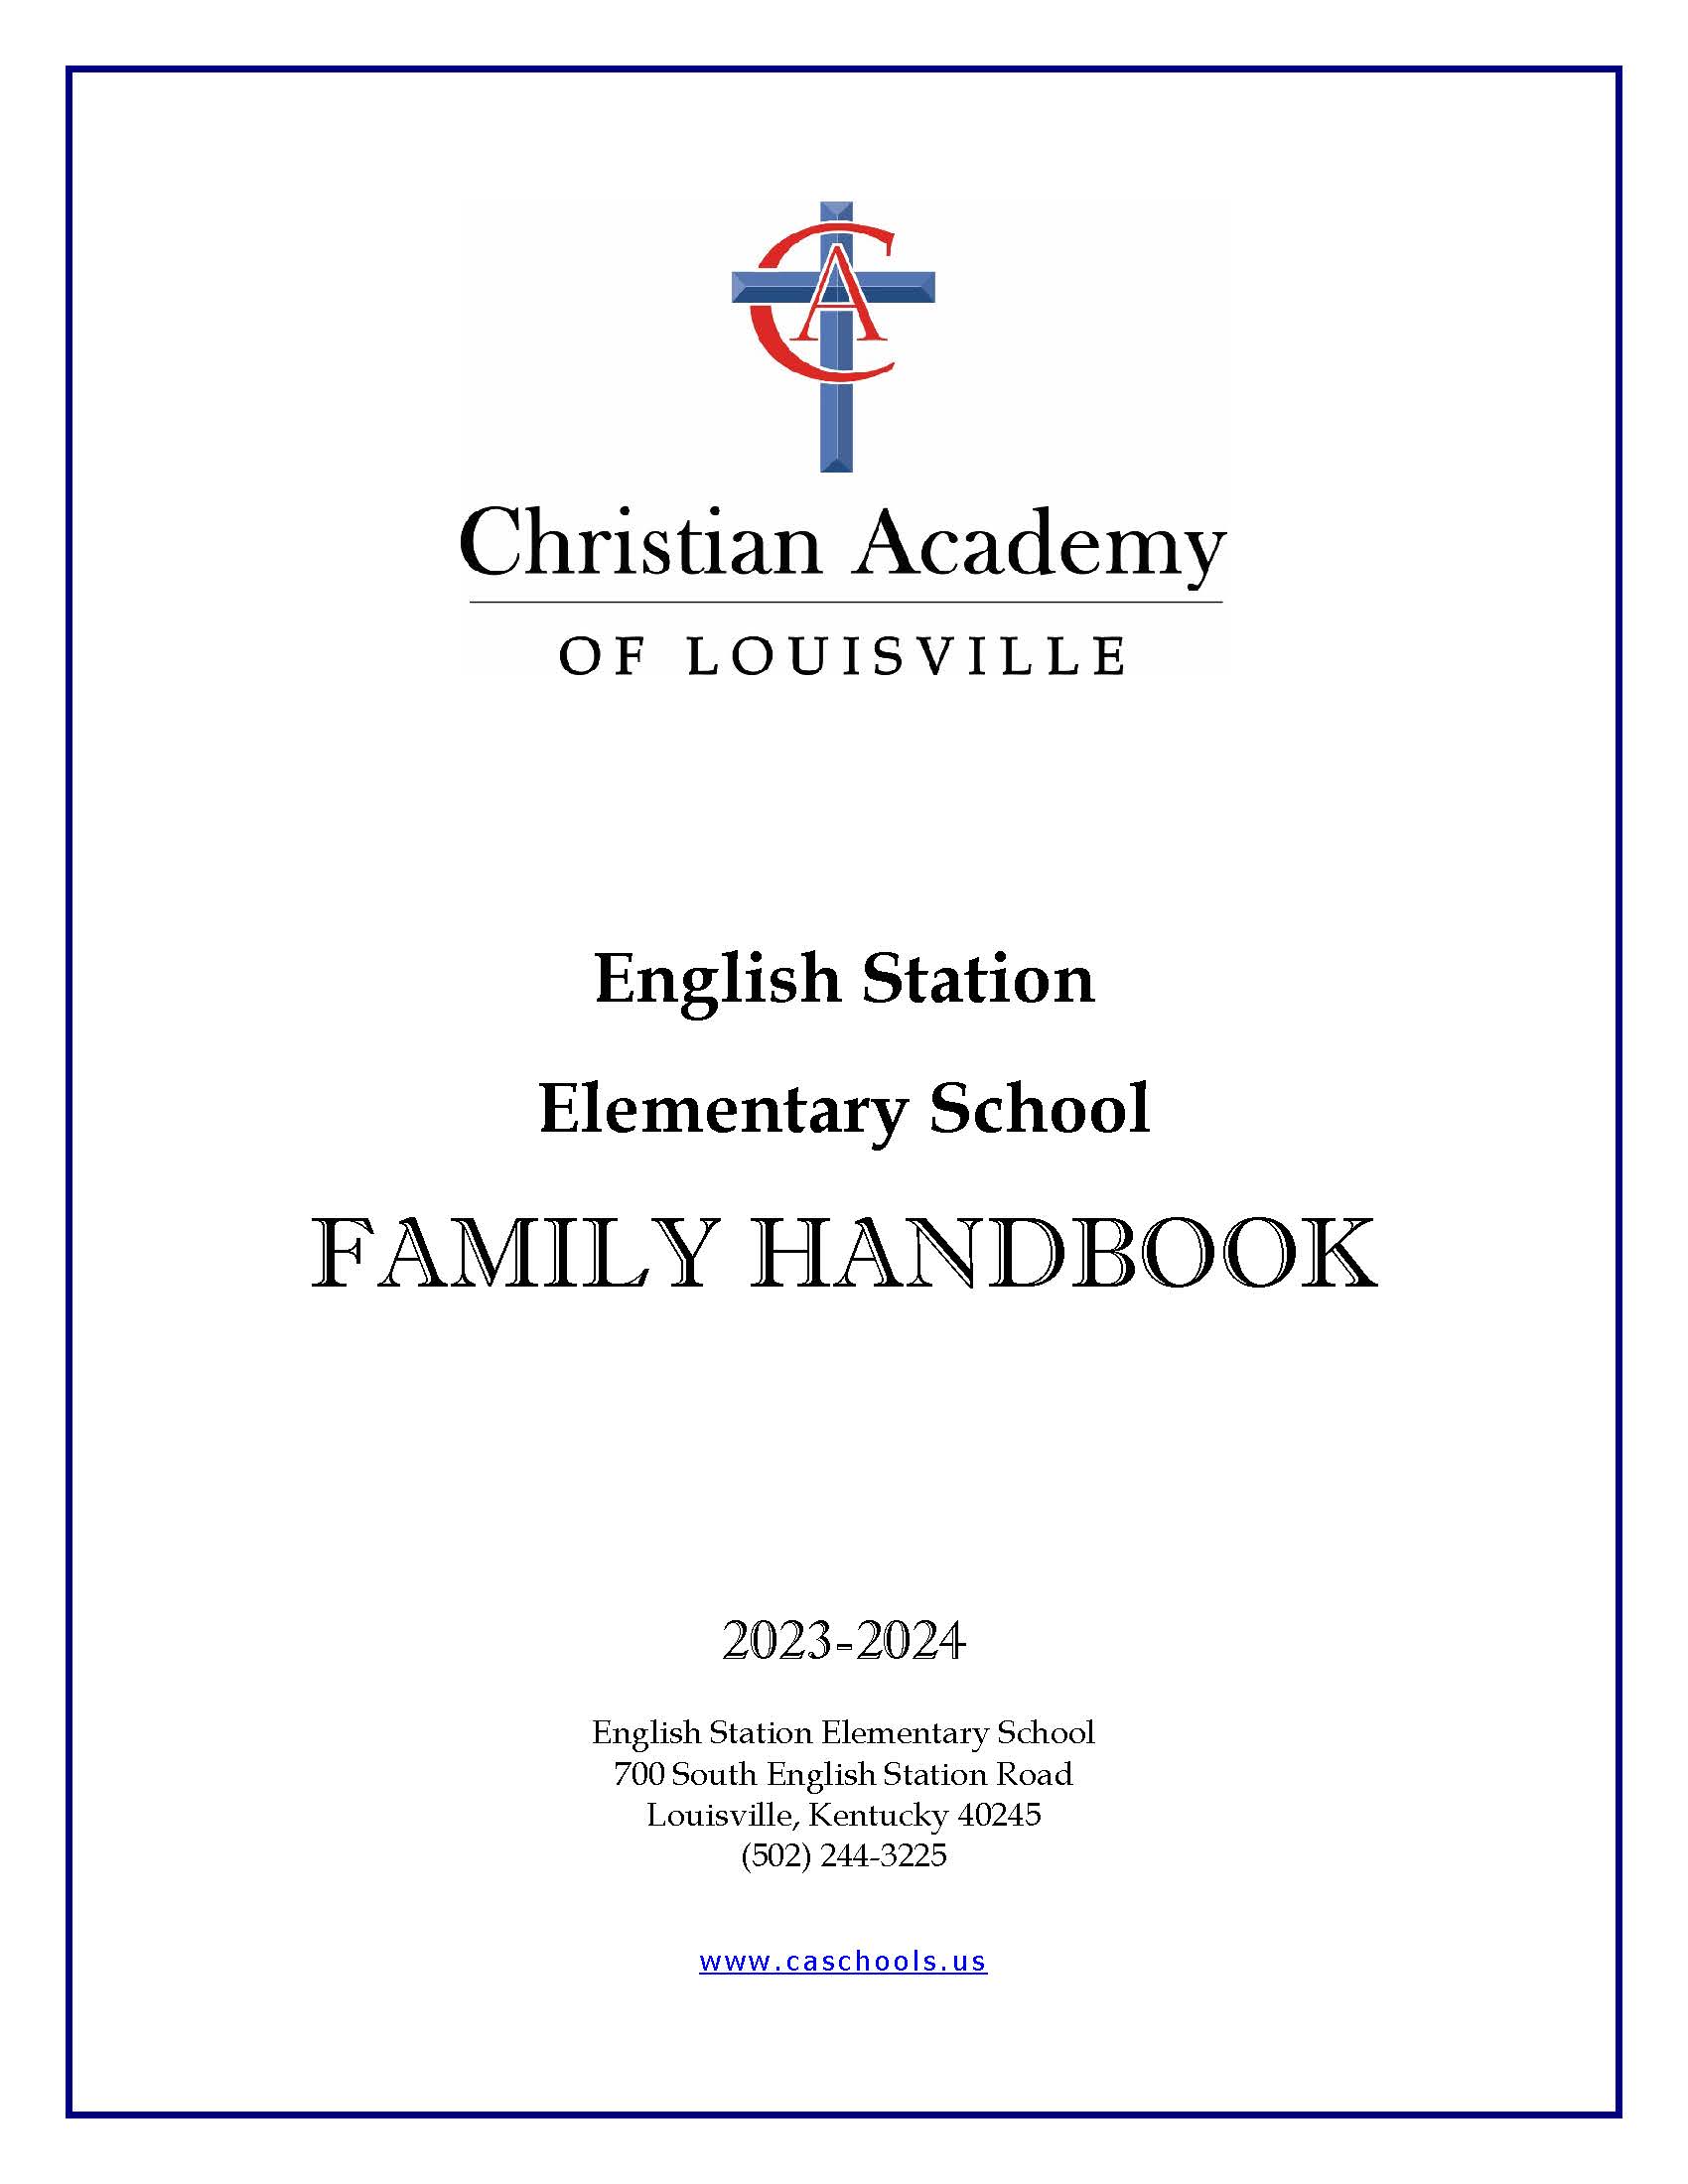 Christian Academy School System | Christian Academy of Louisville | English Station Elementary | 2023-2024 Family Handbook